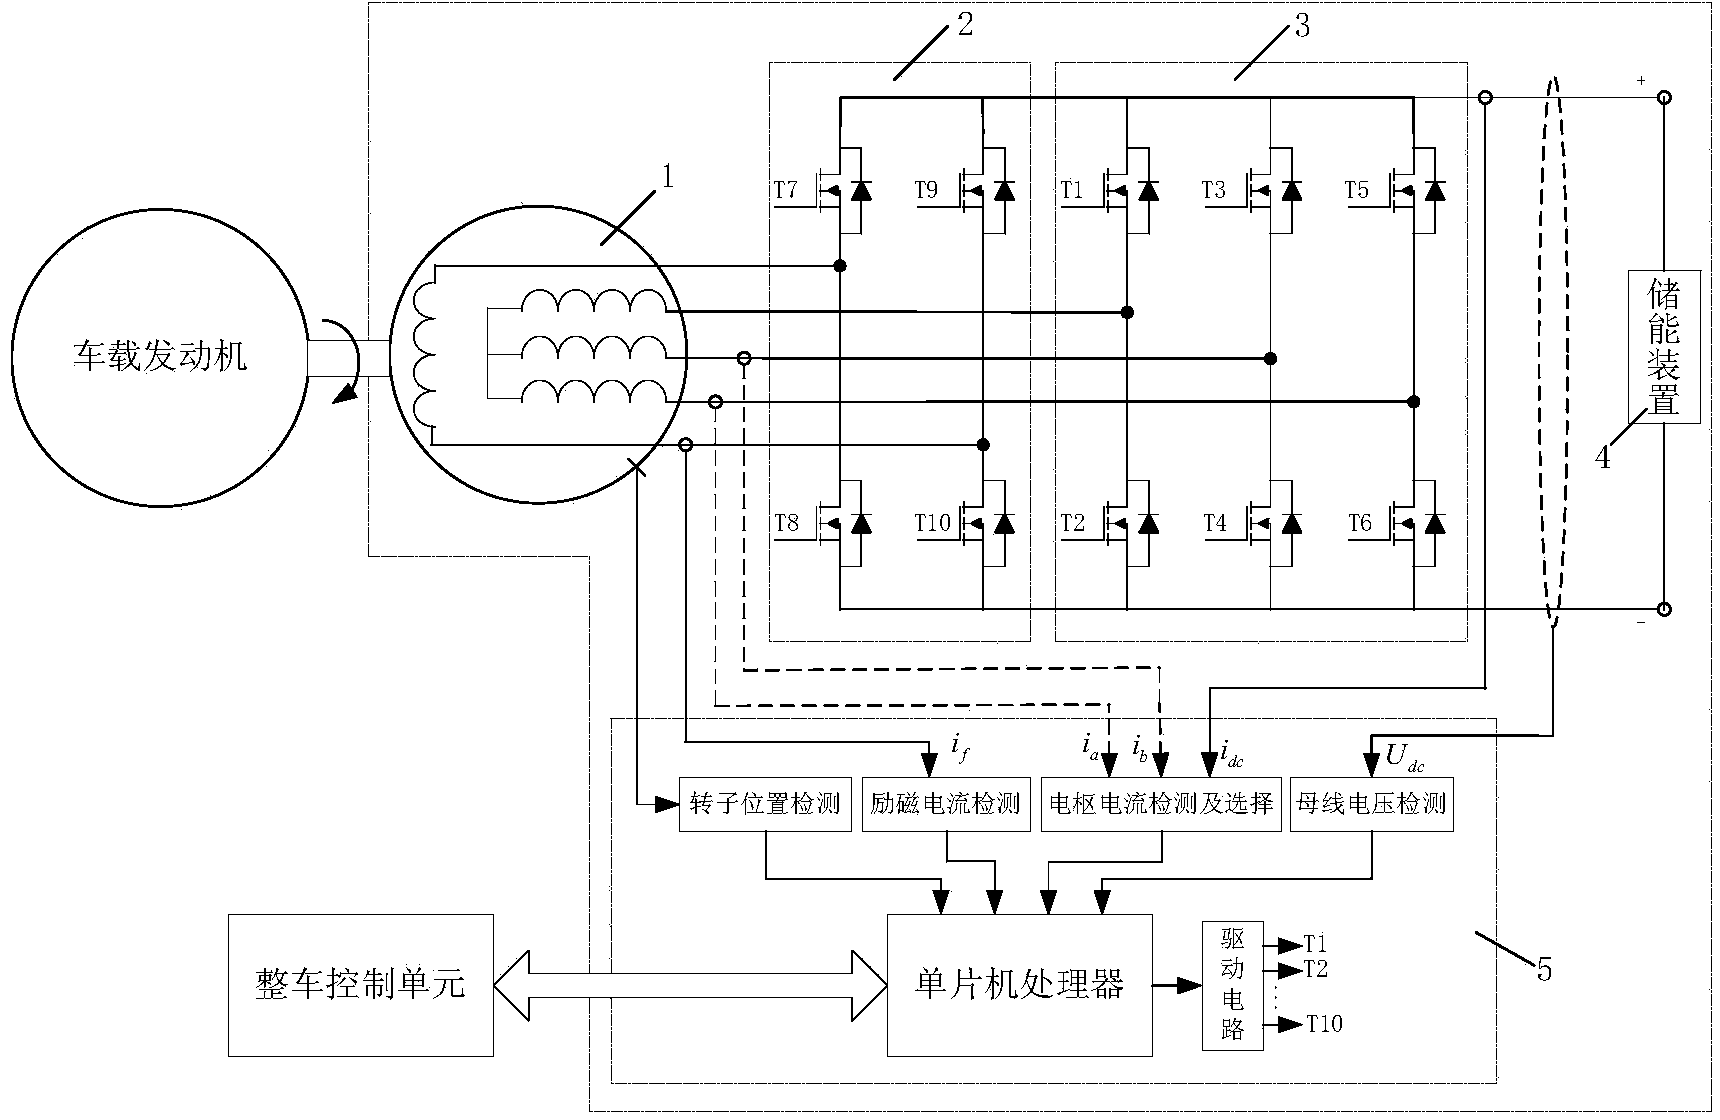 Square wave combining excitation starter/ electric generator control method